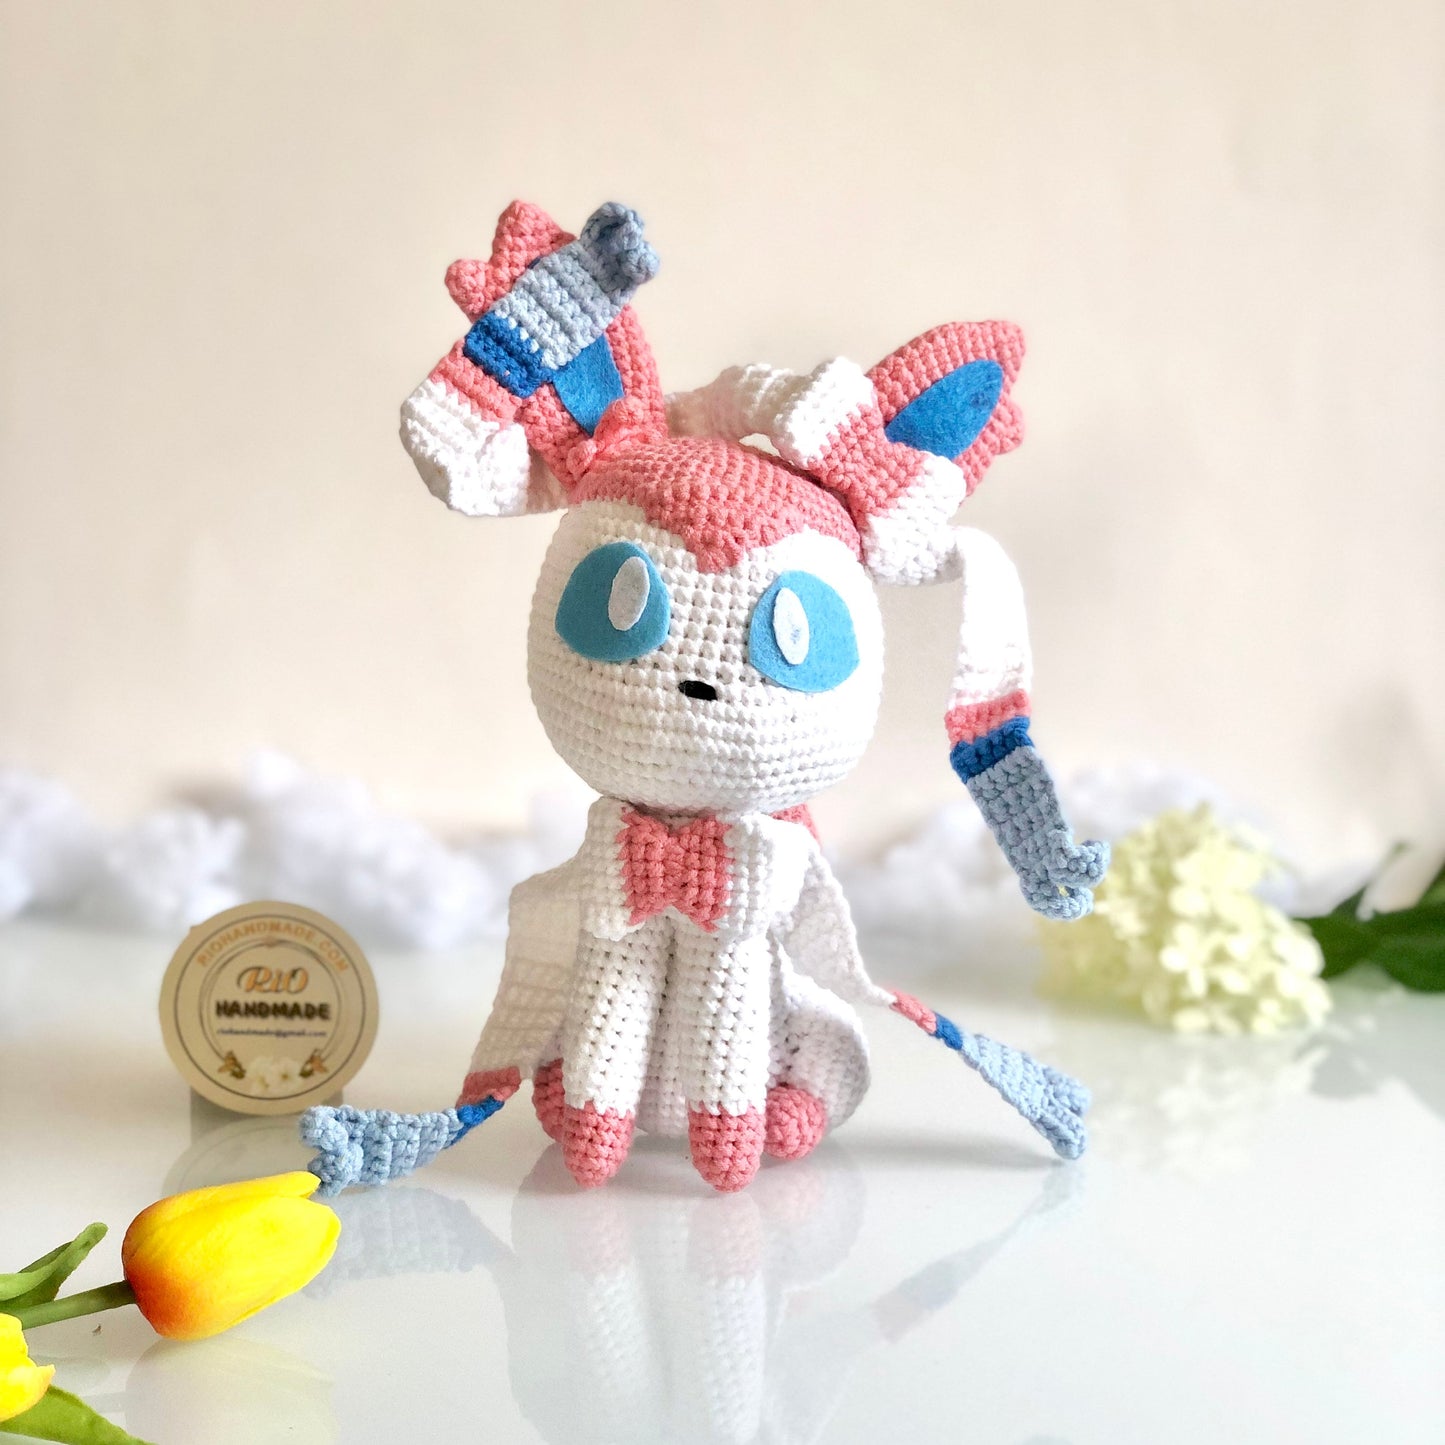 Handmade Cotton Yarn Sylveon Inspired, Crochet Sylveon, Inspired by Pokemon, Amigurumi Toy, cute, toddler, kid, adult hobby